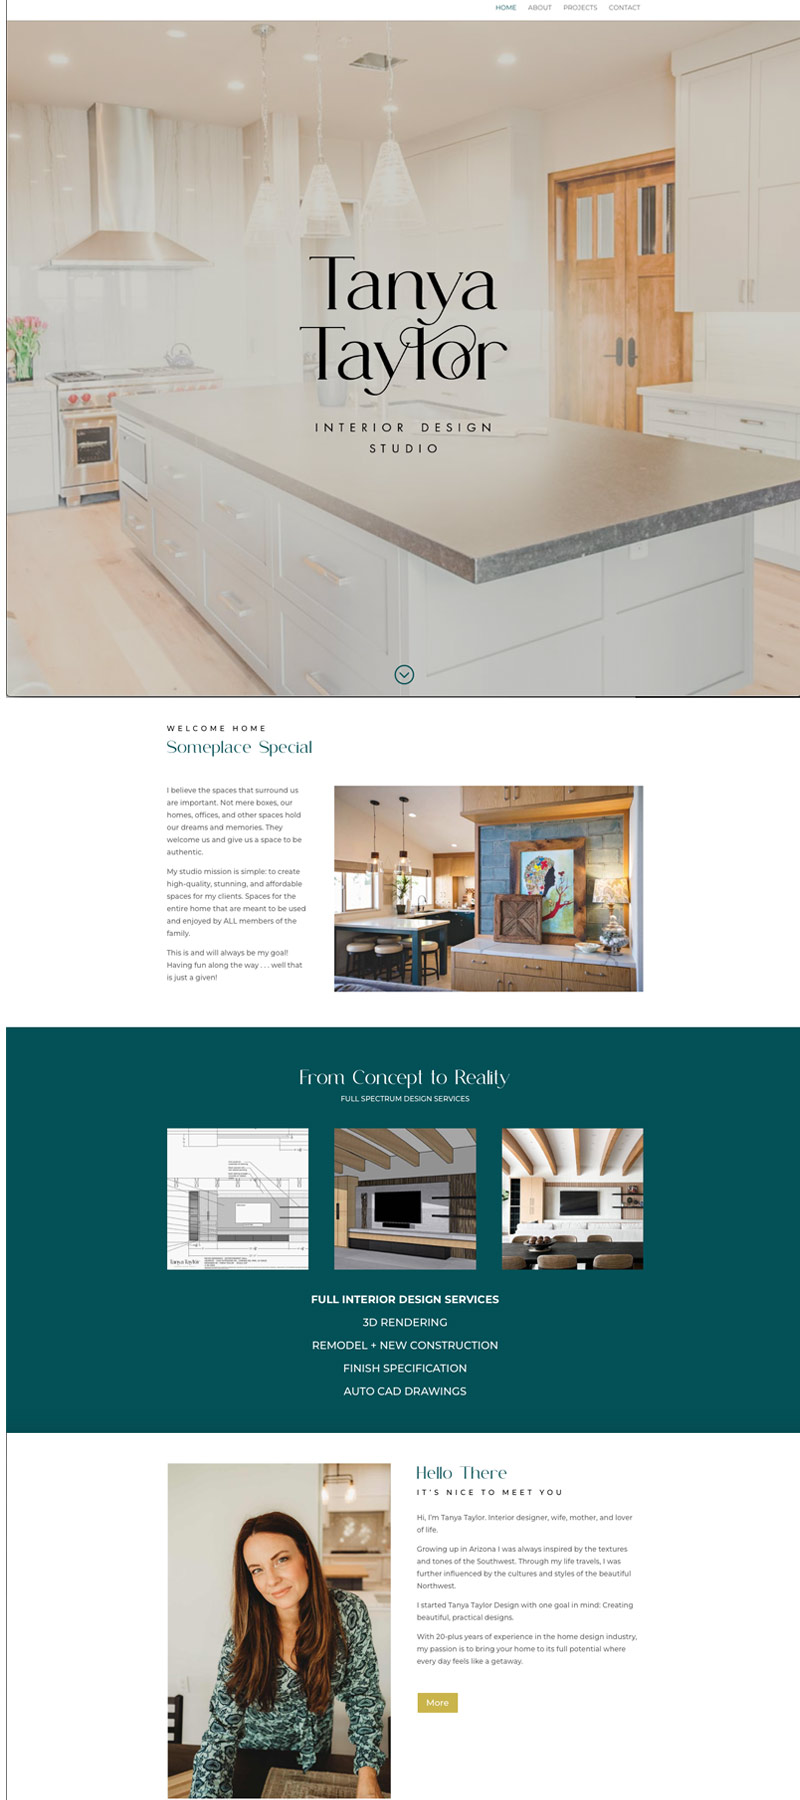 Tanya Taylor Interior Design Studio website